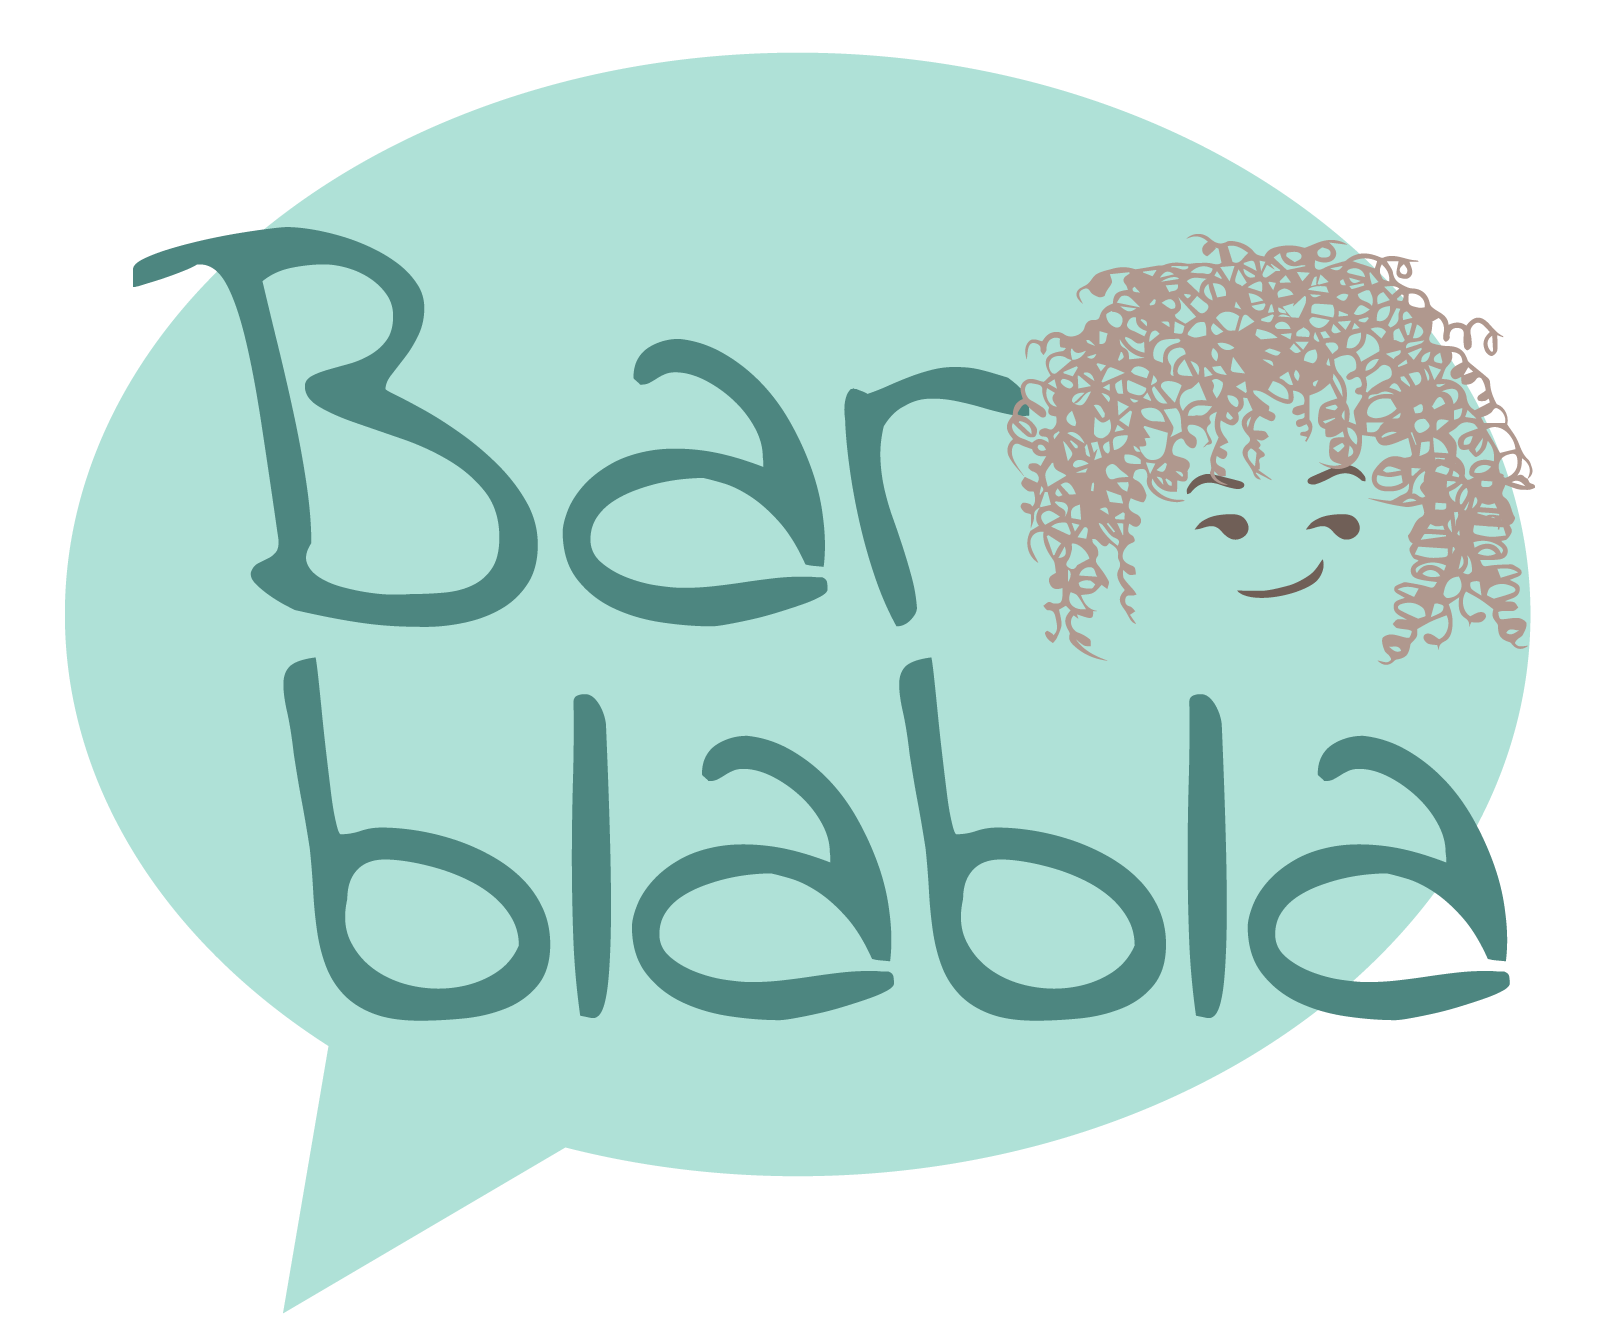 Barbara blogt